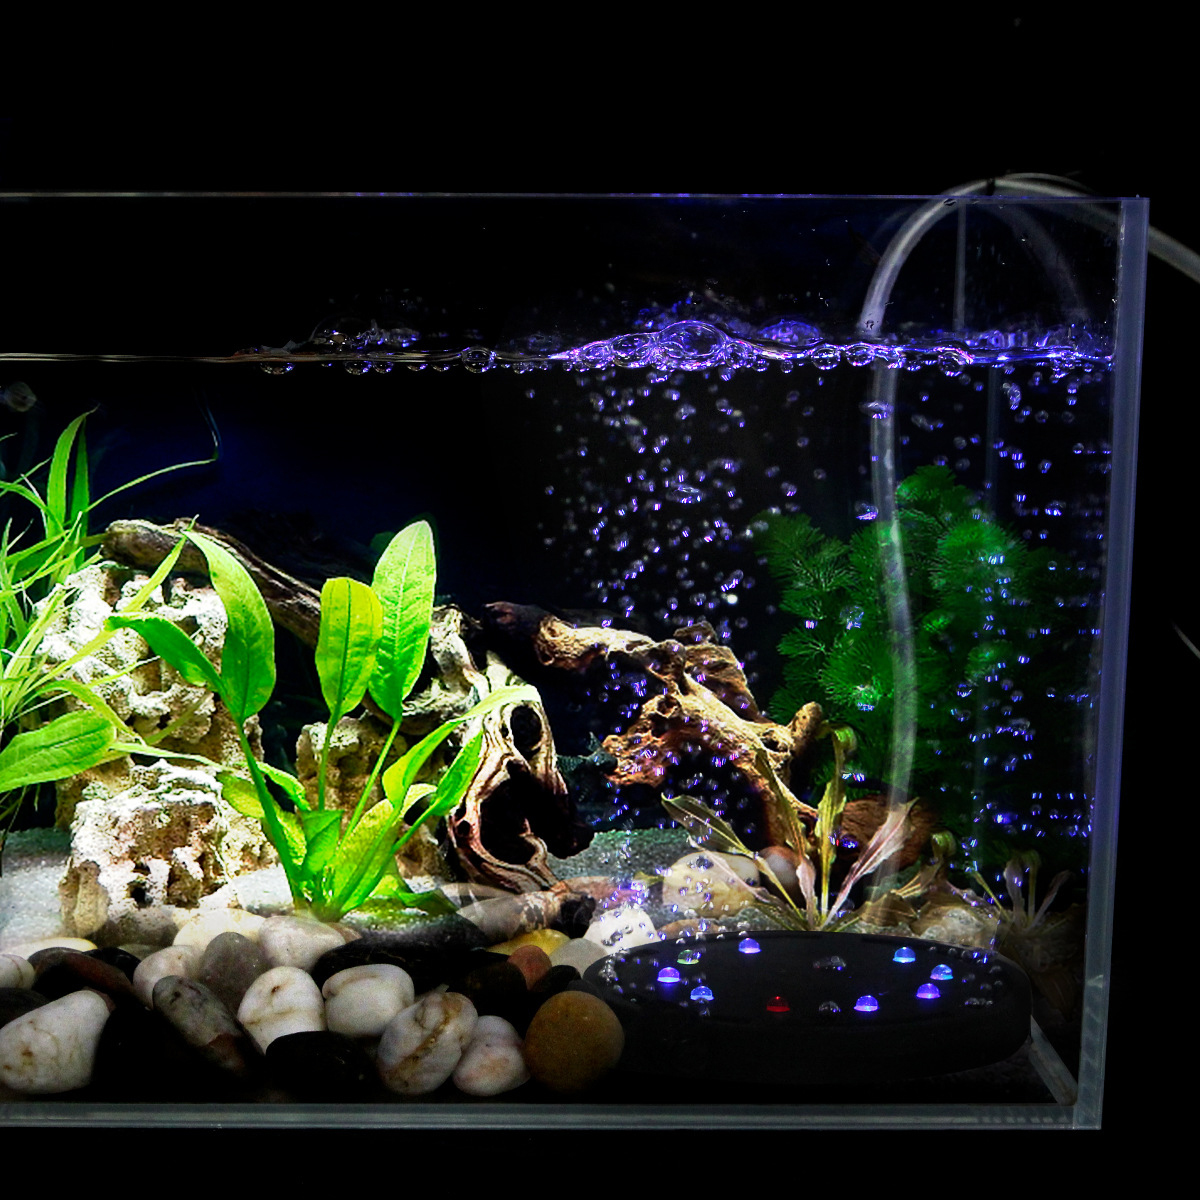 12-RGB-LEDs-Underwater-Submersible-Fish-Tank-Light-Color-Changing-Air-Bubble-Light-Waterproof-Aquari-1878853-9